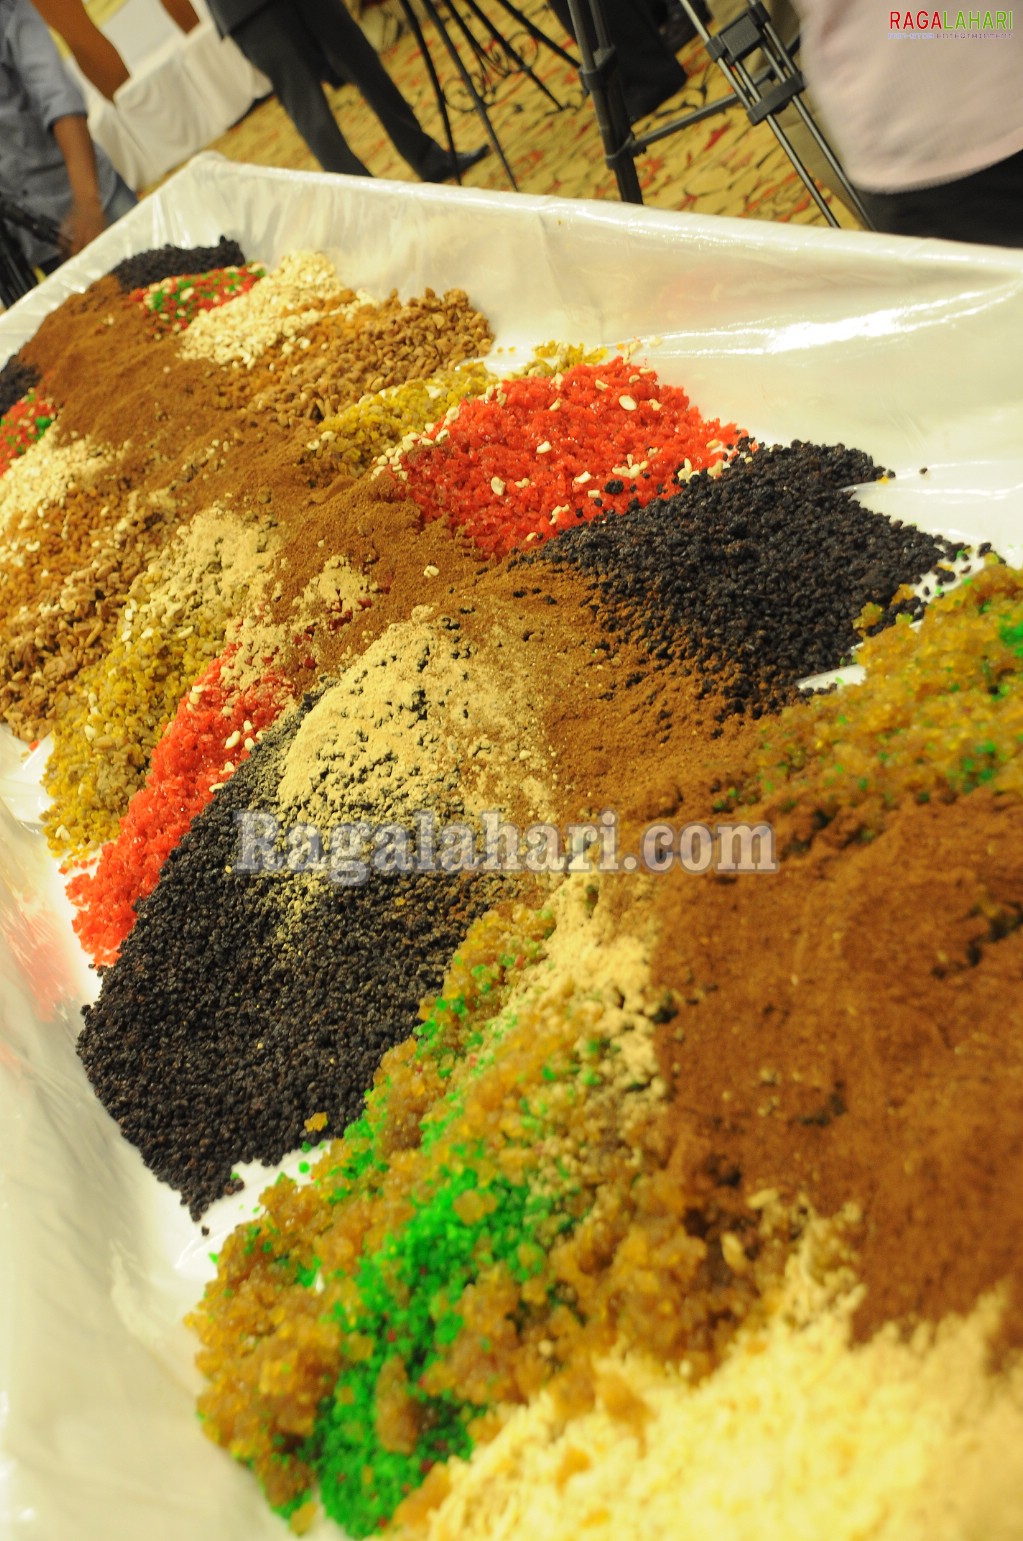 Cake Mixing Ceremony, Taj Banjara, Hyd